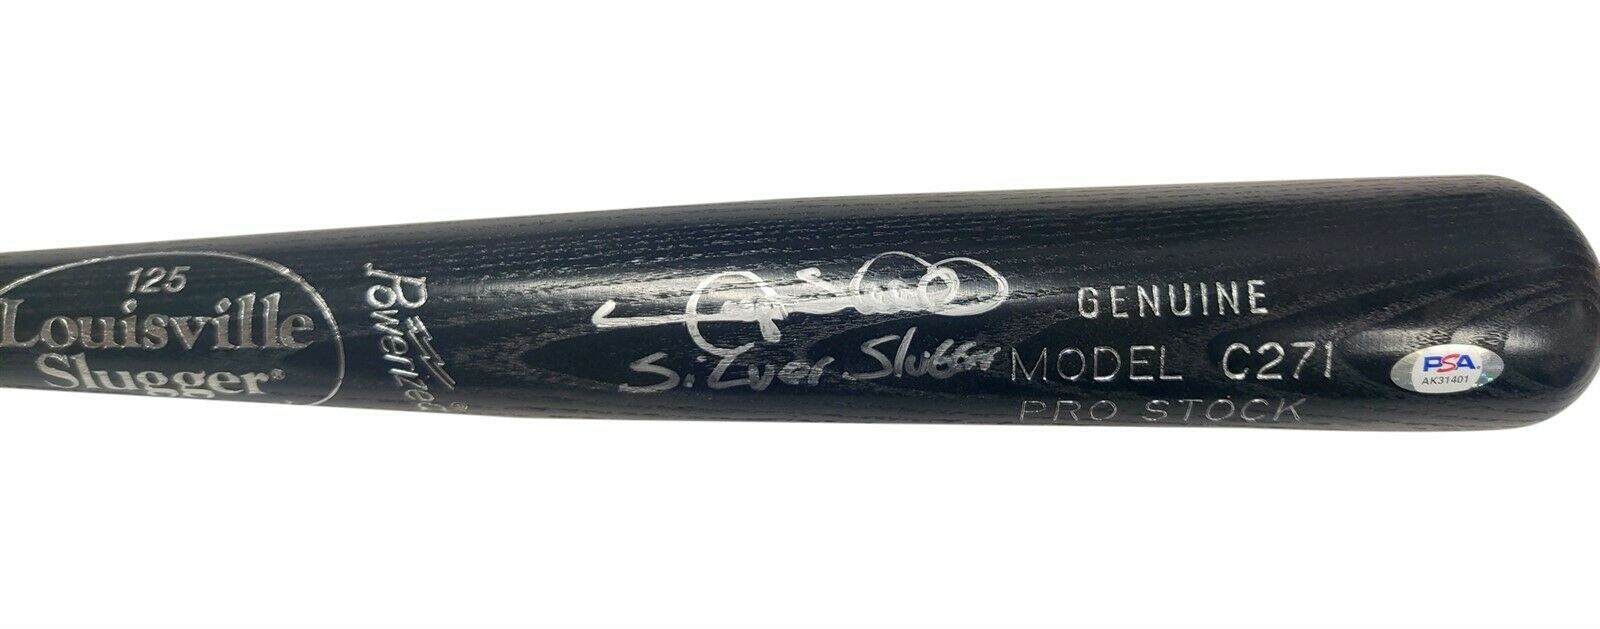 Gary Sheffield Milwaukee Brewers Signed Louisville Slugger Bat AK31401 (PSA/DNA COA)